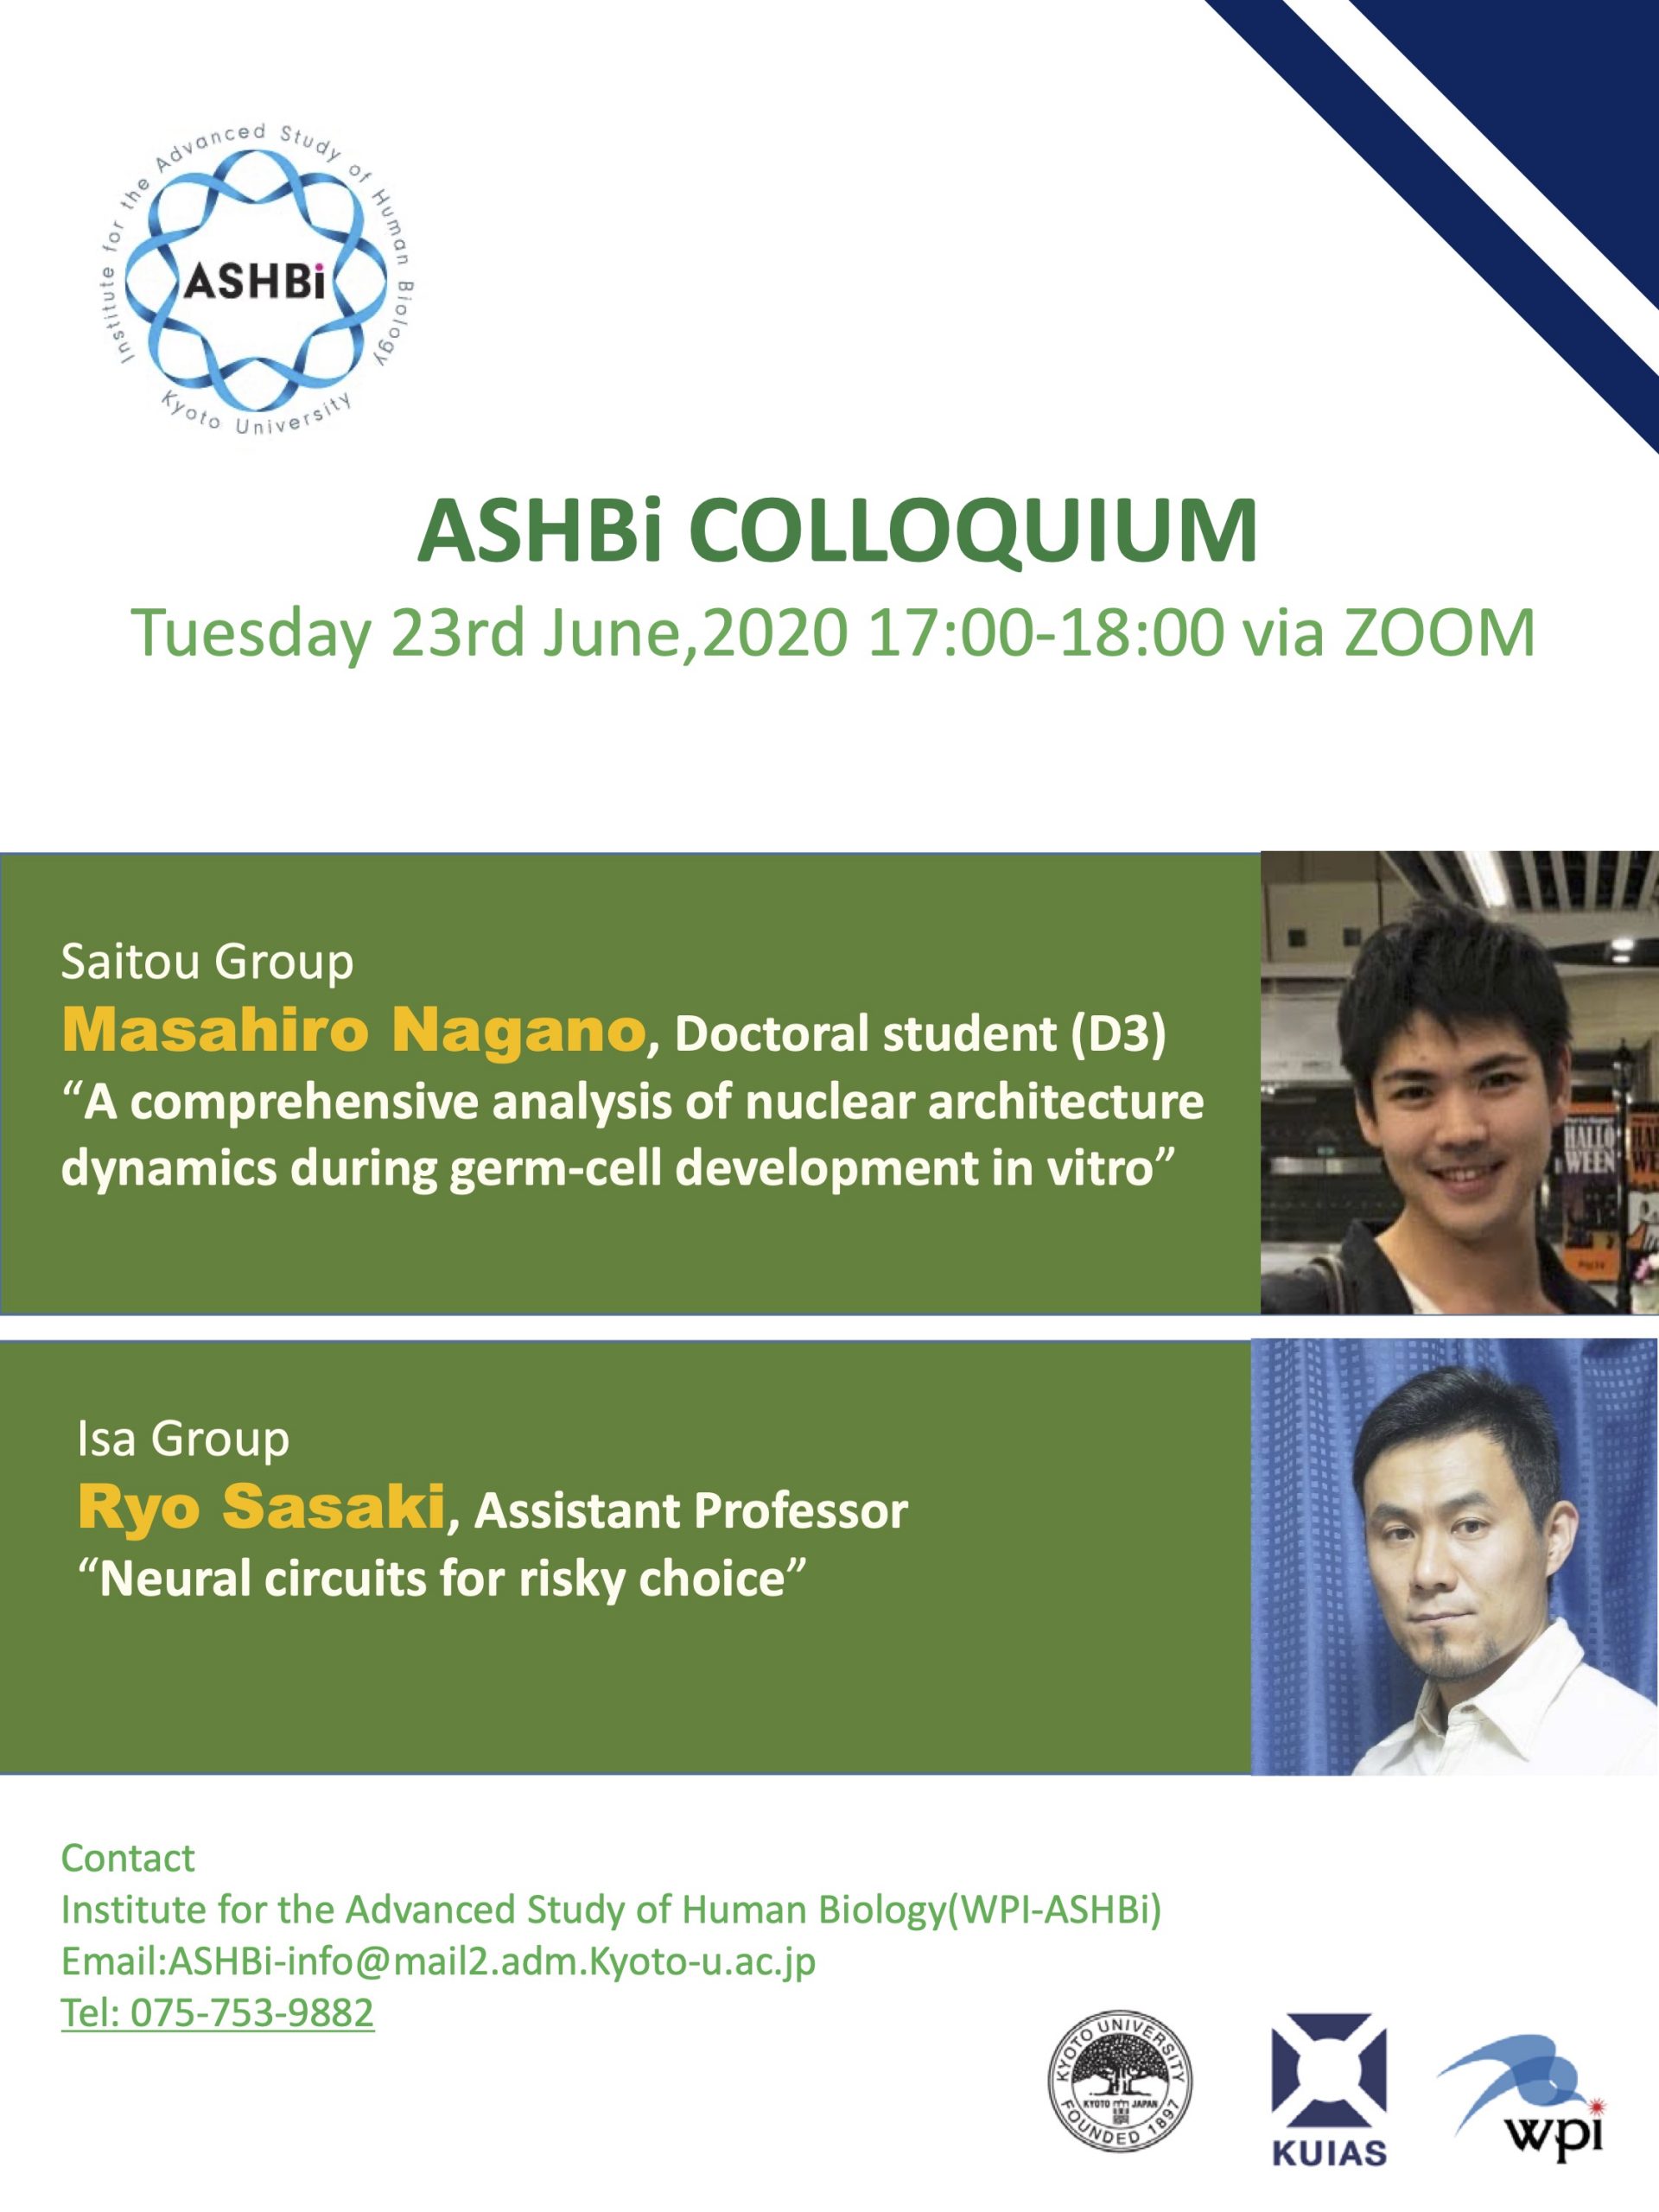 8th ASHBi Colloquium (Saitou Group and Isa Group)